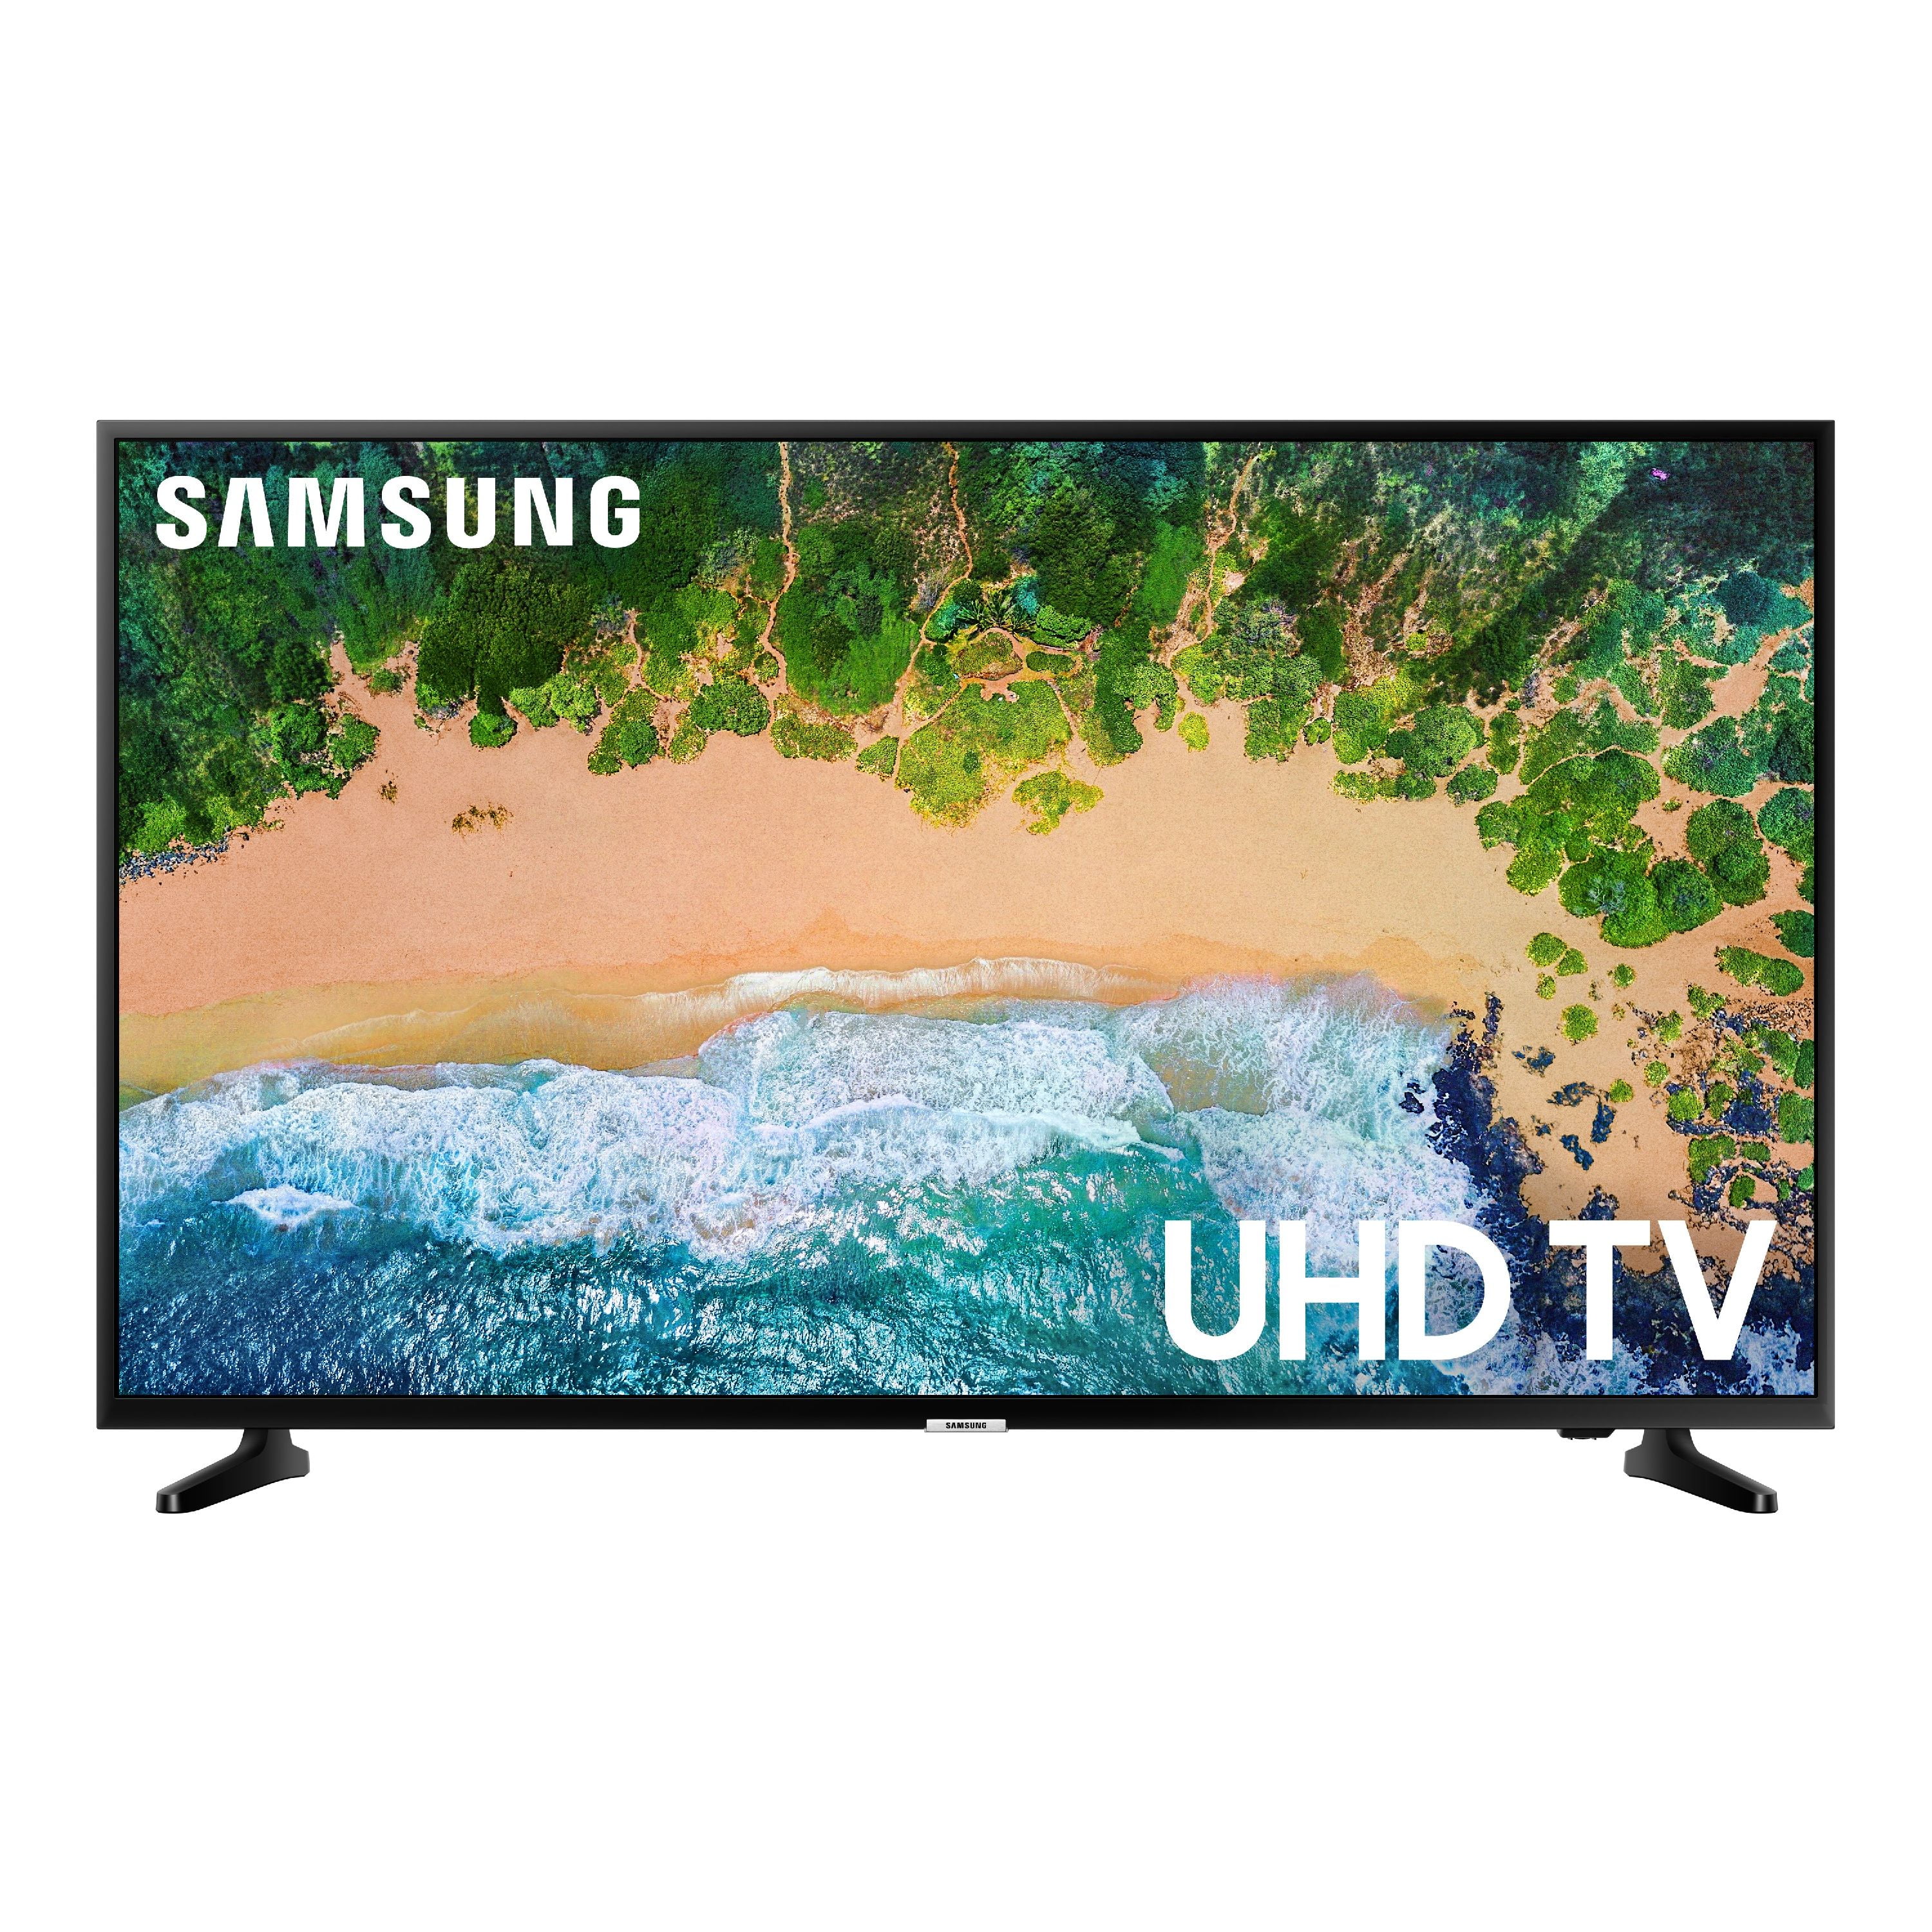 gebruiker controller rand SAMSUNG 50" Class 4K UHD 2160p LED Smart TV with HDR UN50NU6900 -  Walmart.com